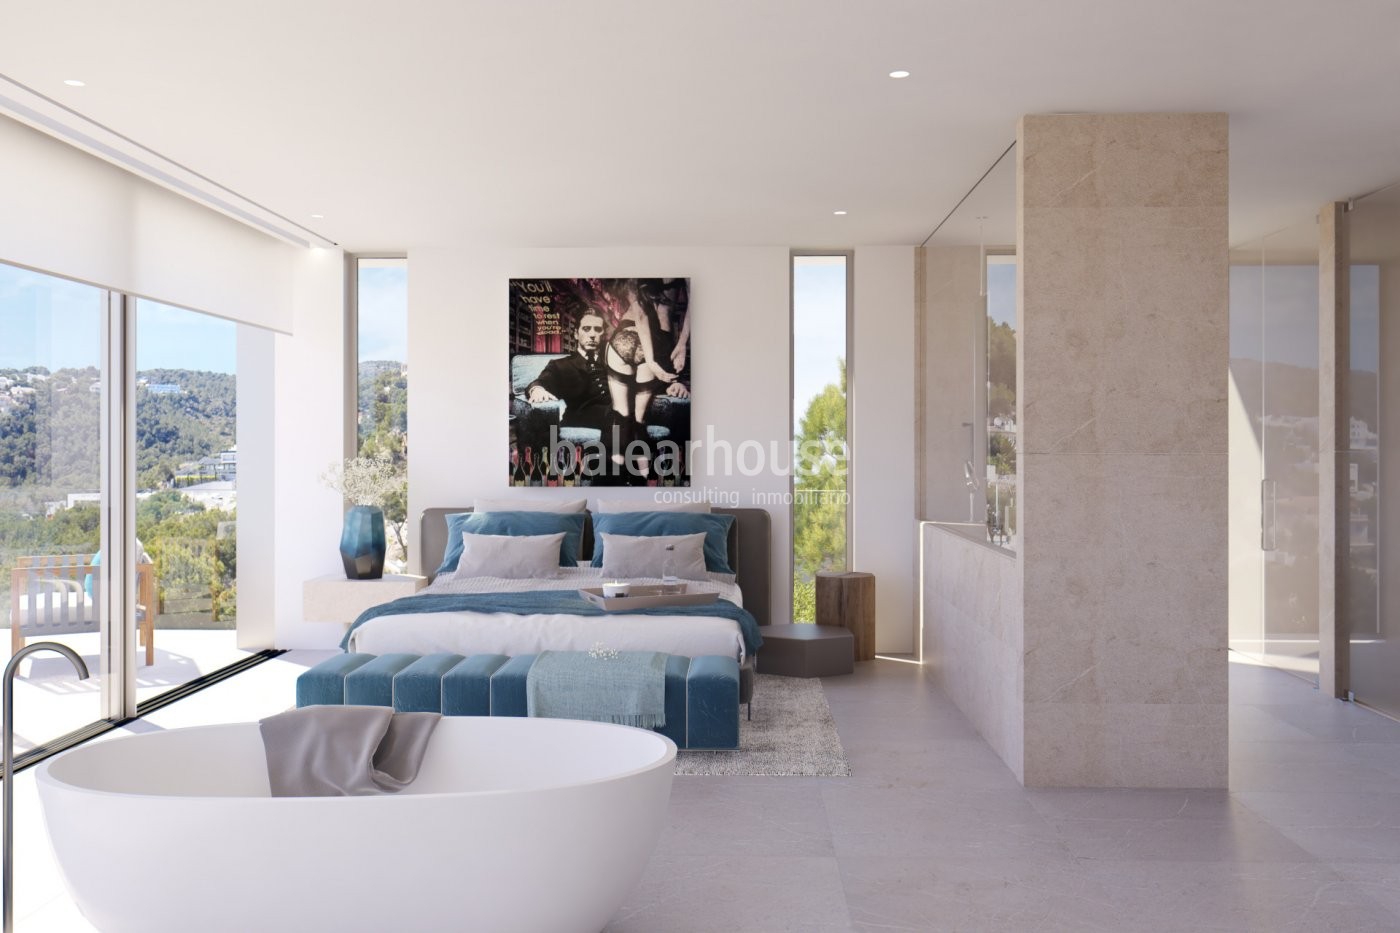 Spektakuläre neu gebaute moderne Villa mit Meerblick in Costa den Blanes